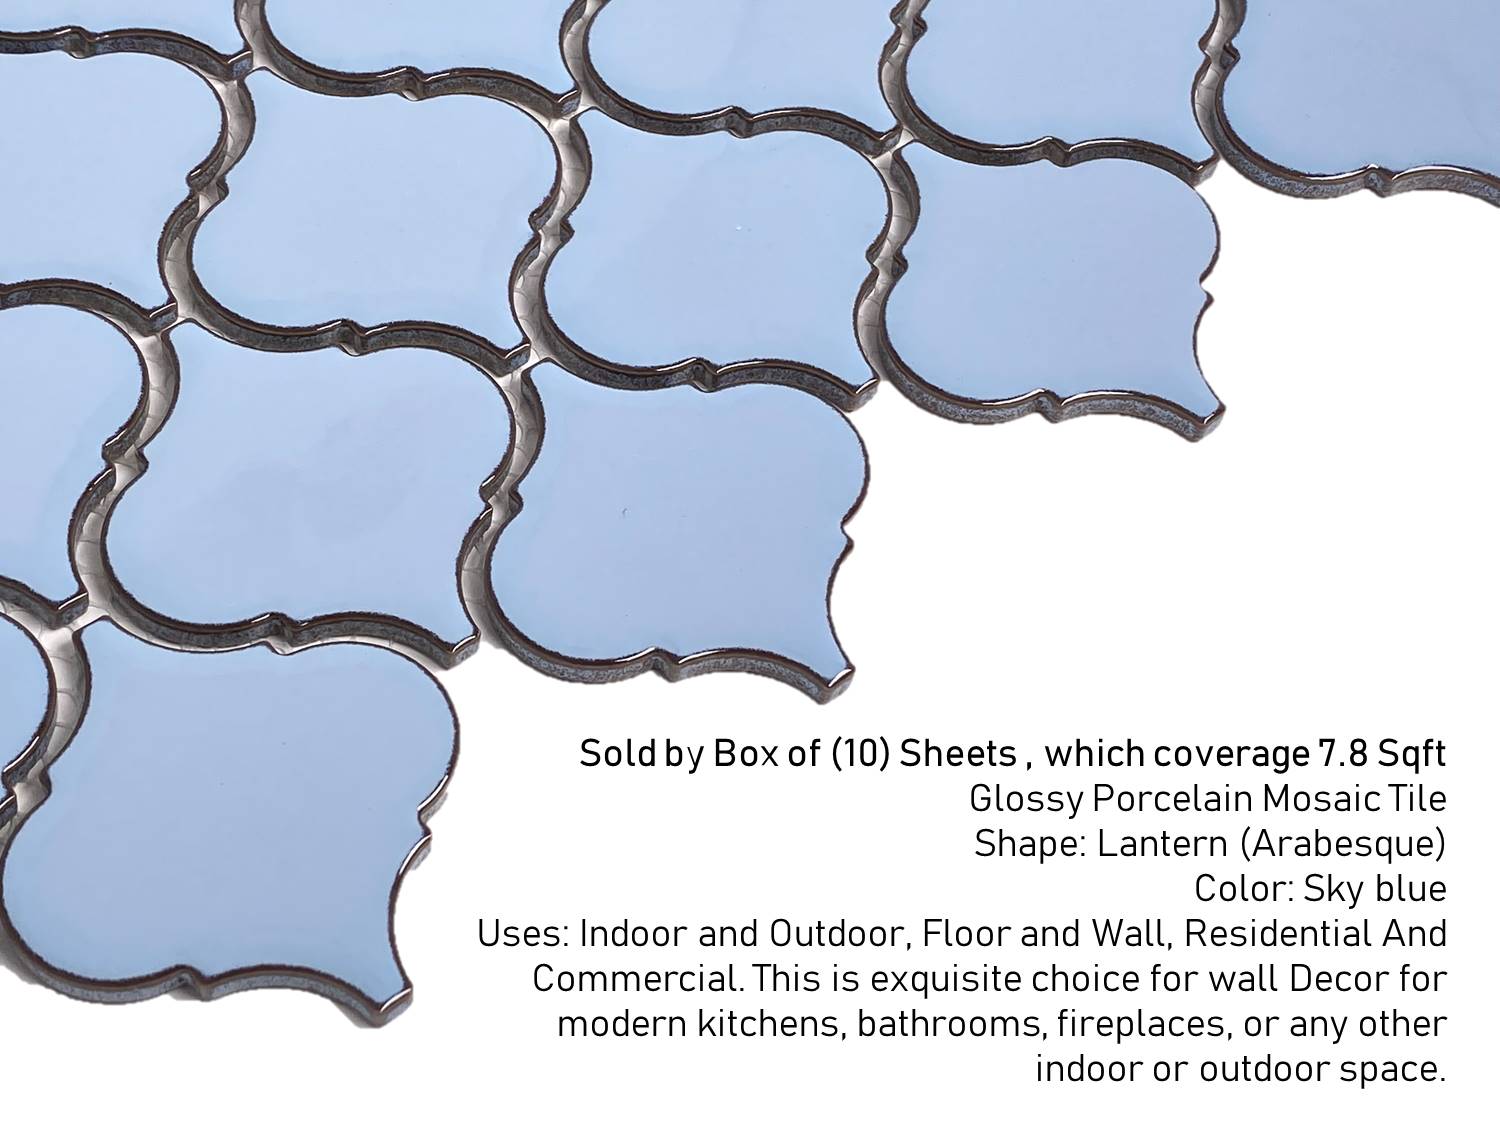 Santorini Sky Blue Lantern Porcelain Glossy Mosaic Wall Tile for Kitchen Backsplash Bathroom Wall Pool Tiles by Tenedos (Box of 10 Sheets)